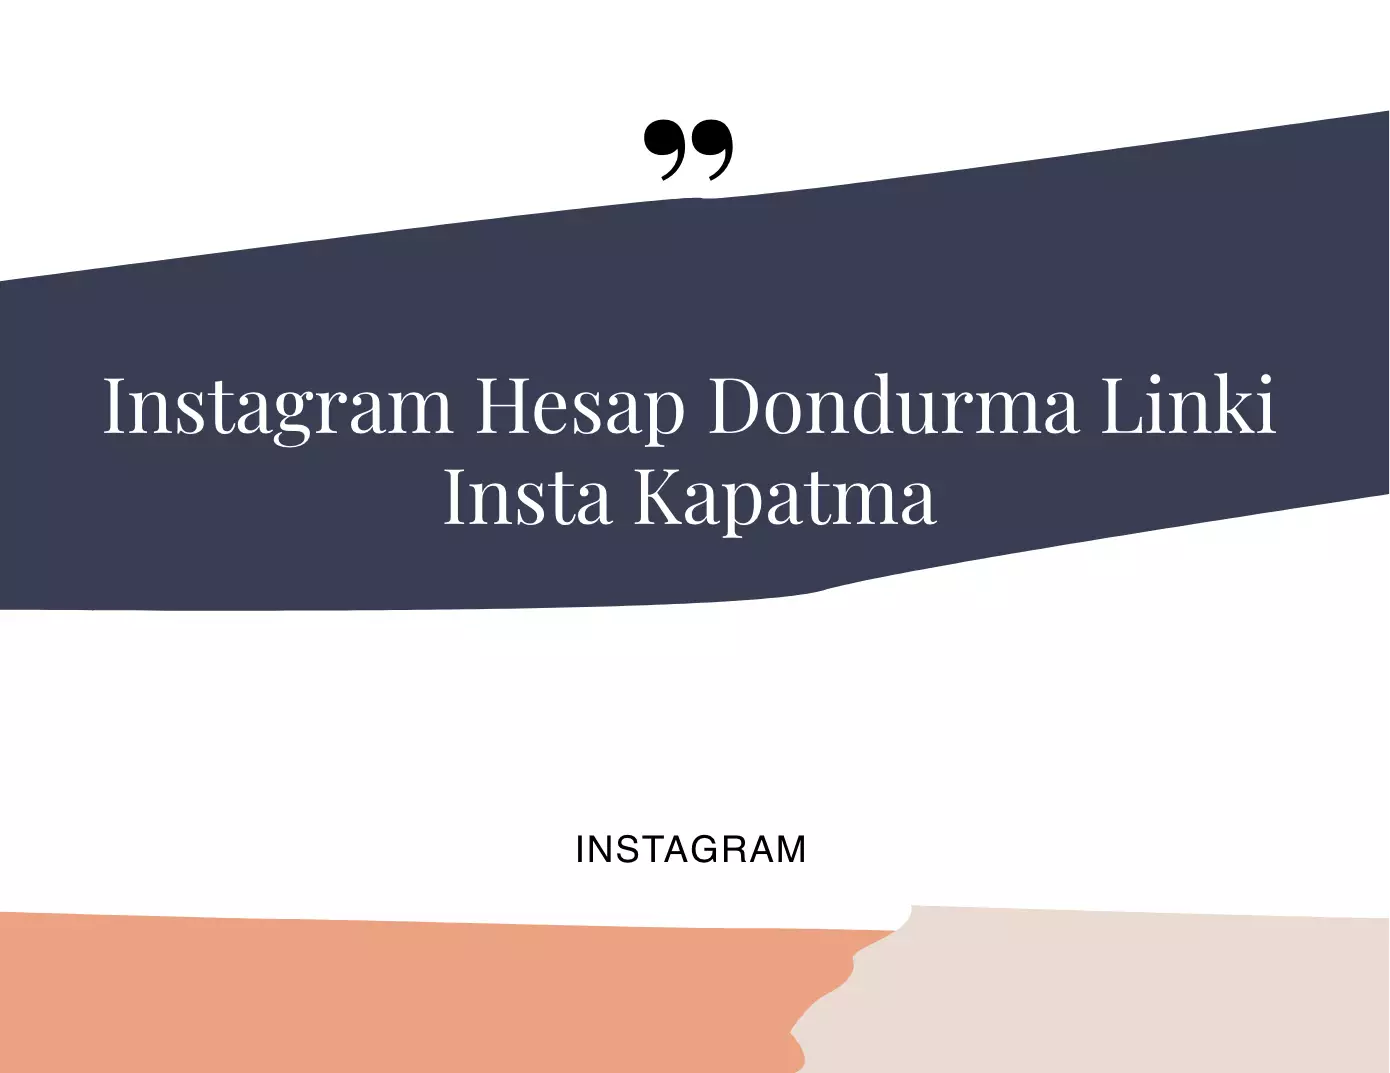 Instagram Hesap Dondurma Linki - Insta Kapatma